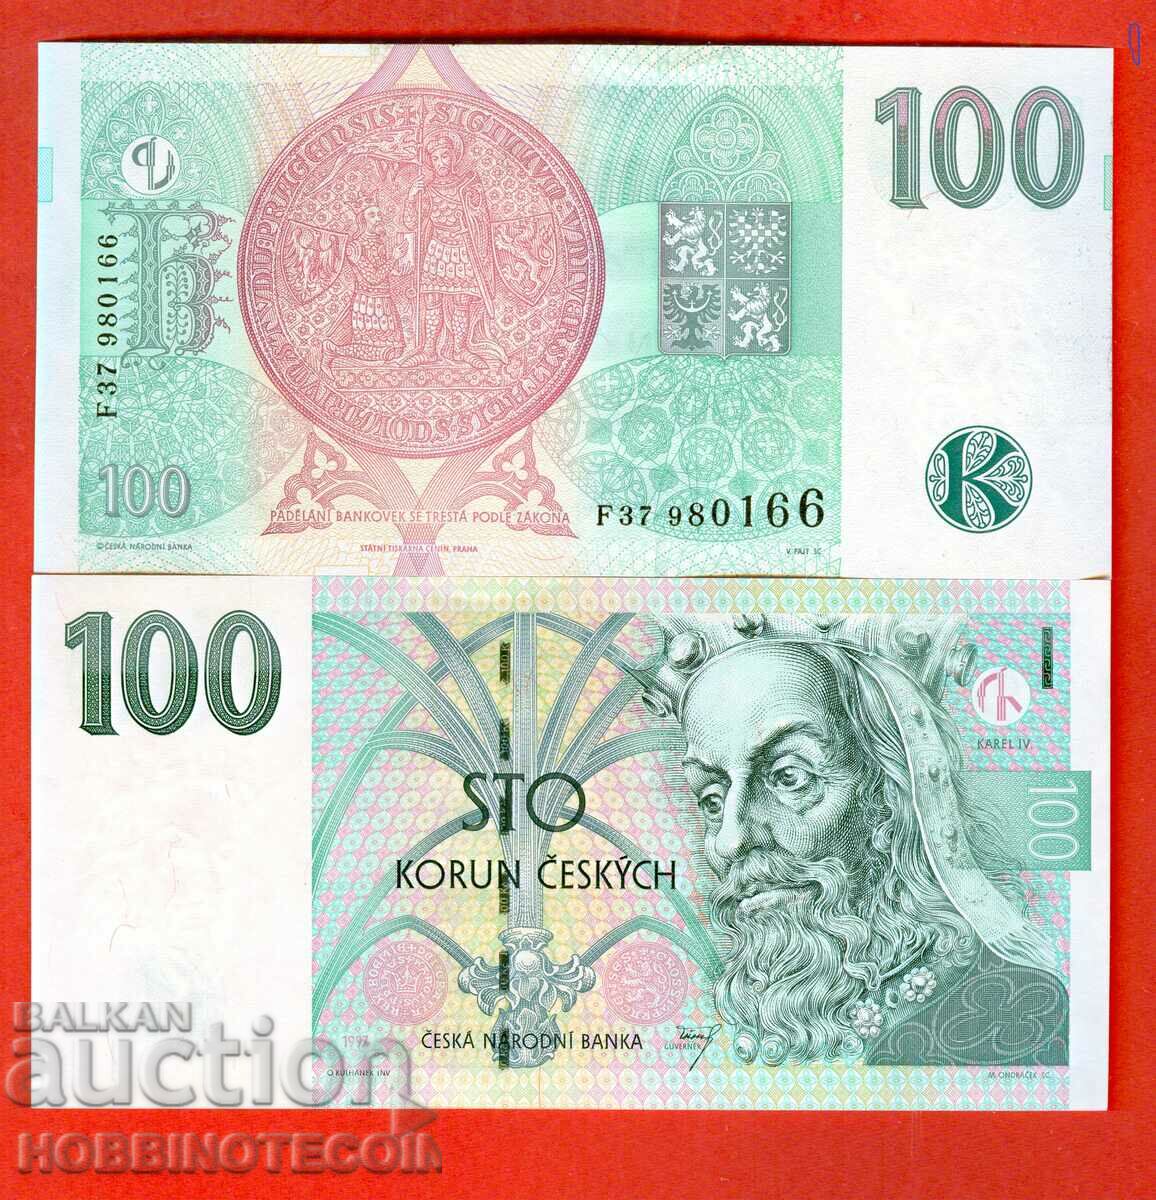 CZECH REPUBLIC CZECH 100 Krone issue - issue 1997 NEW UNC